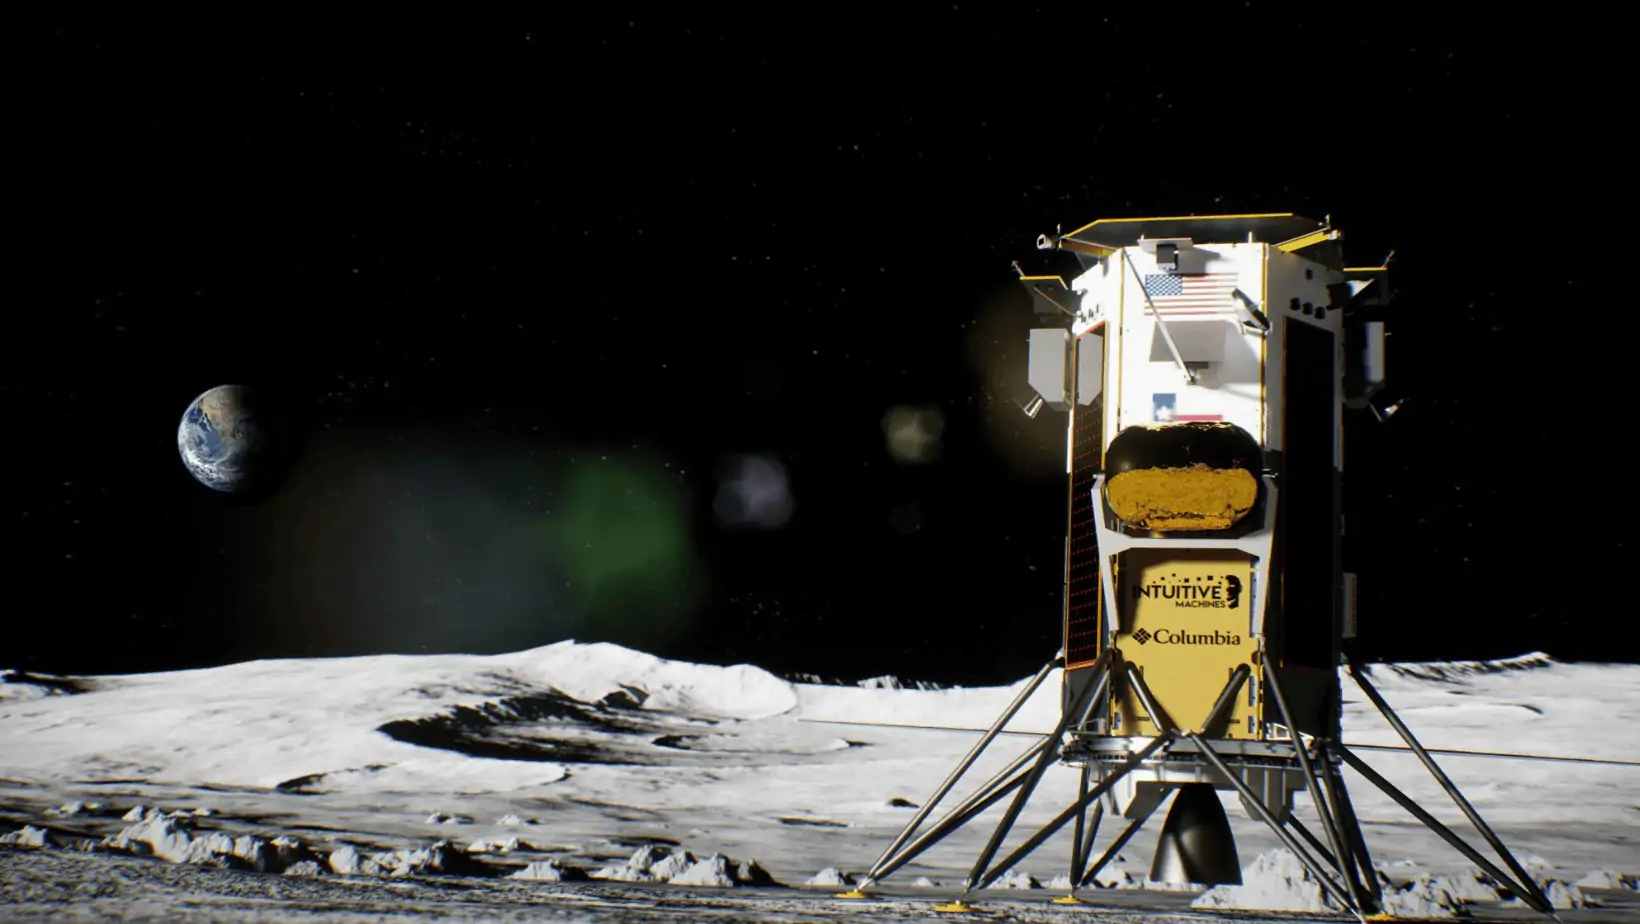 Intuitive Machines Moon Mission Cut Short Due to Landing Mishap